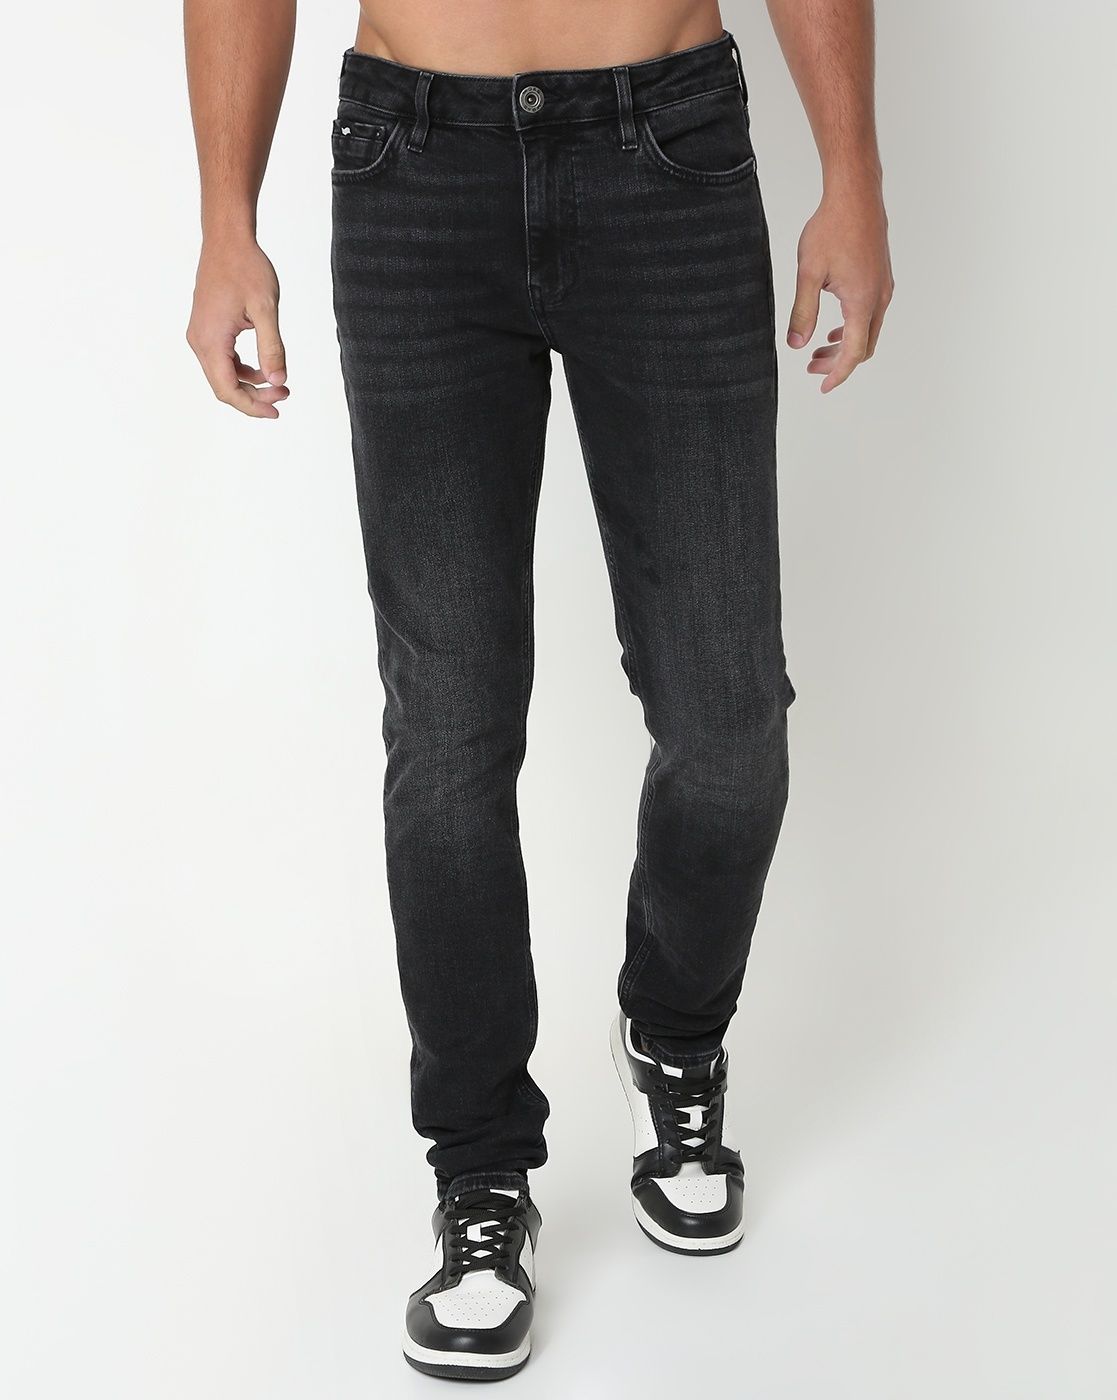 Джинсы Gas jeans model sax skinny